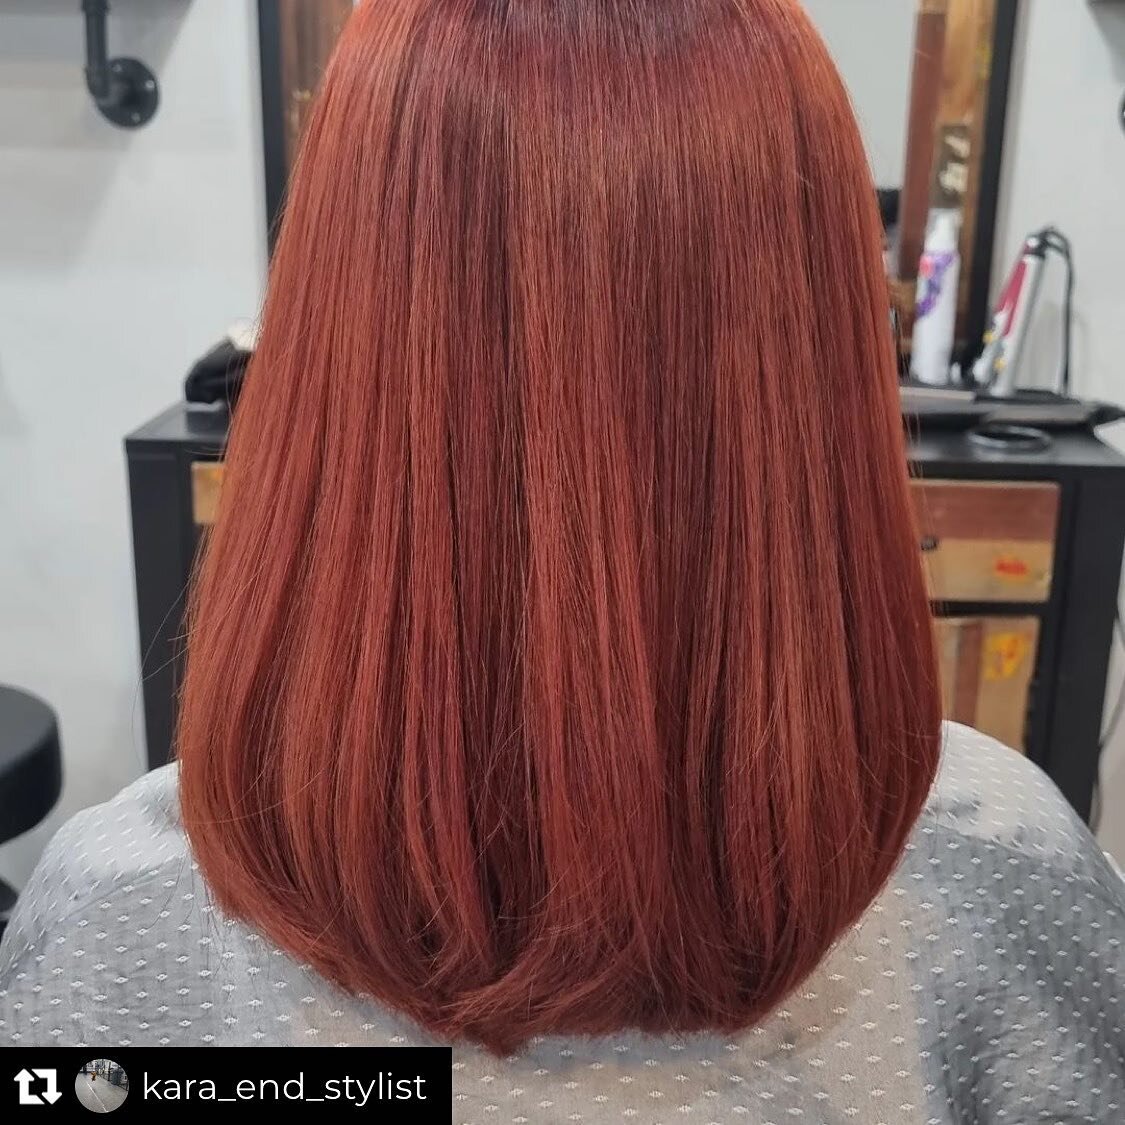 Repost from @kara_end_stylist
&bull;
#Cherry Red Full Dyeing#Arijuna Hair Salon#Mesa Hair Salon#N Hair Salon#Kara Hair Designer